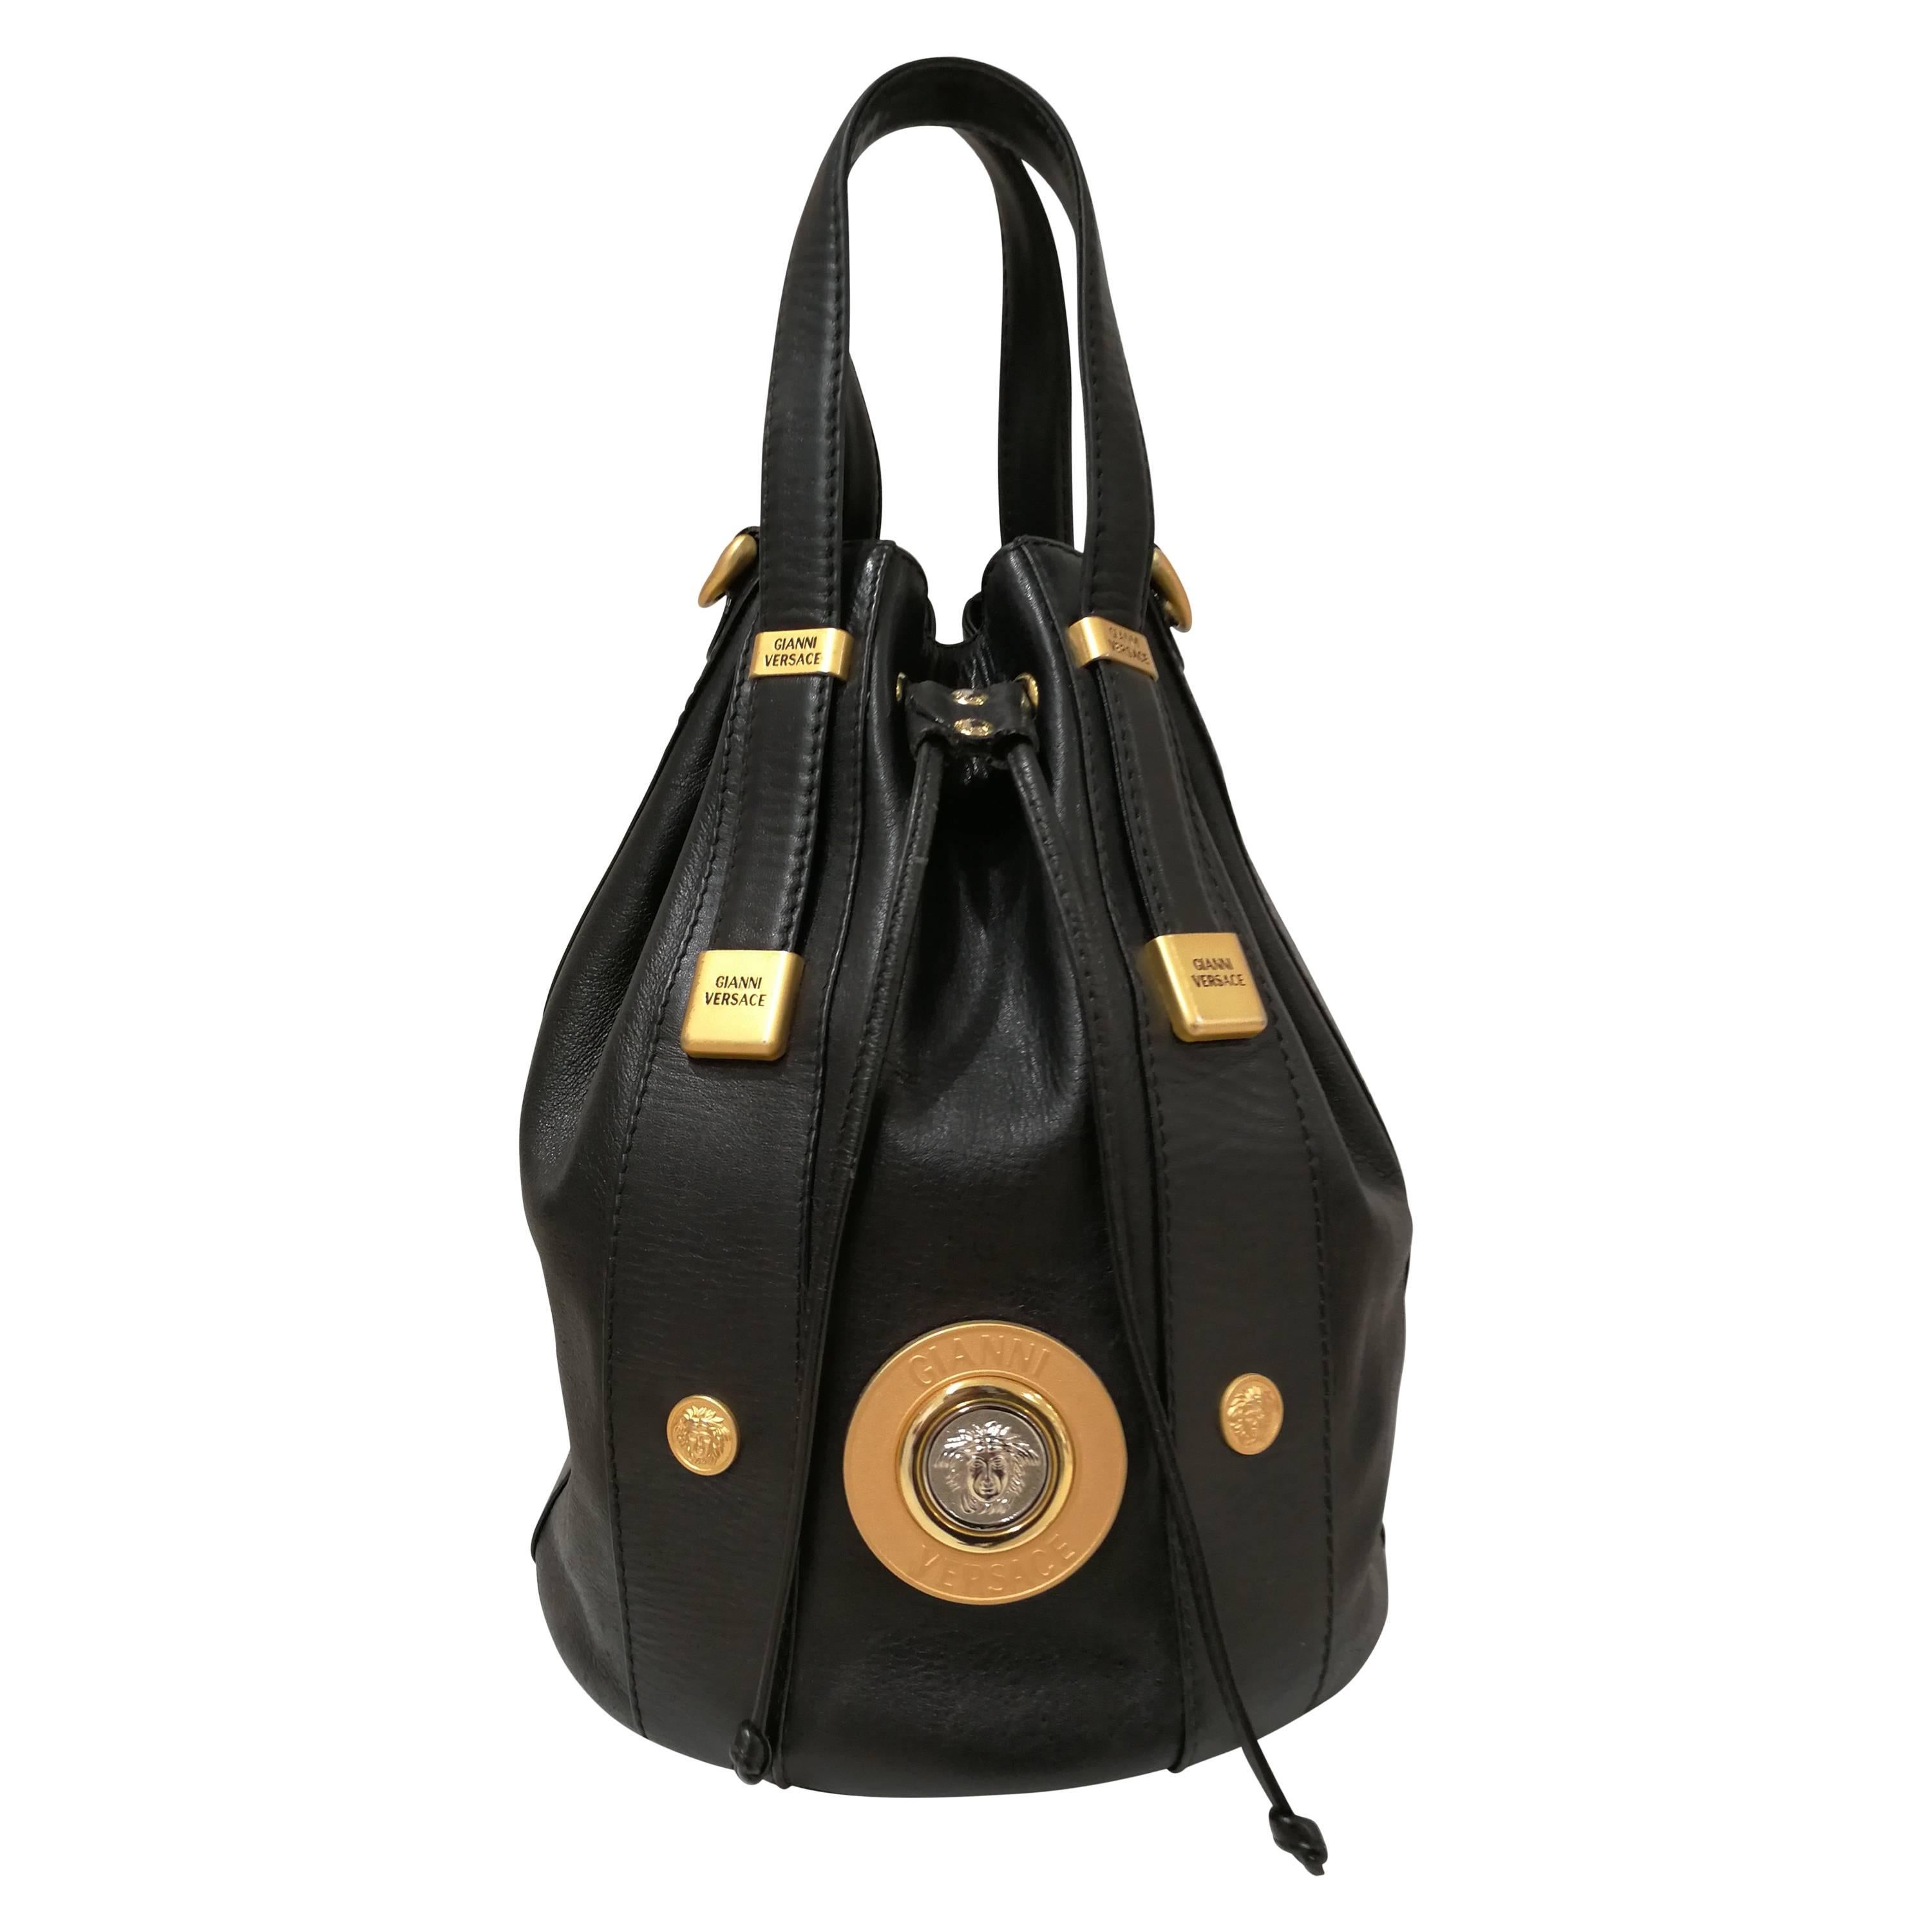 Gianni Versace Black leather Gold and Silver Tone Studs Satchel - Shoulder Bag